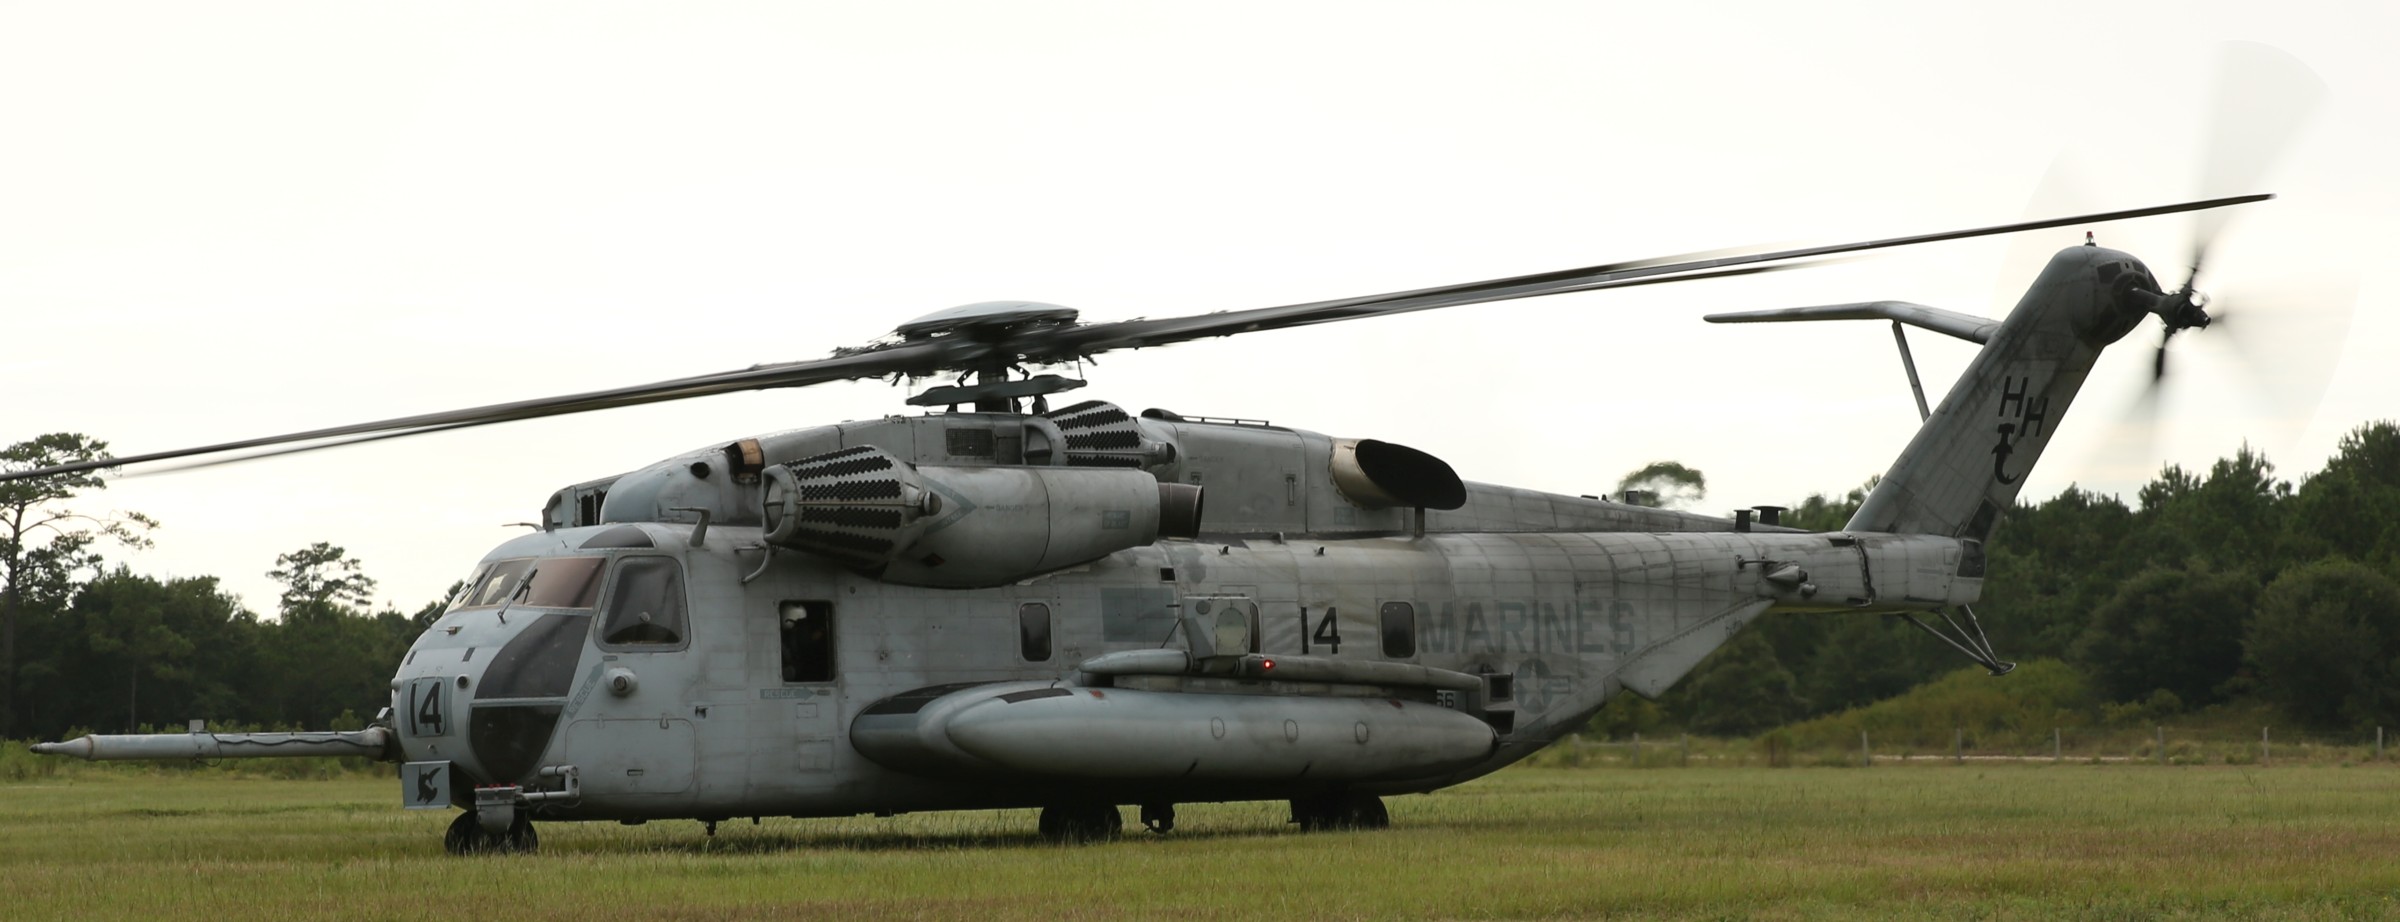 hmh-366 hammerheads marine heavy helicopter squadron usmc sikorsky ch-53e super stallion 59